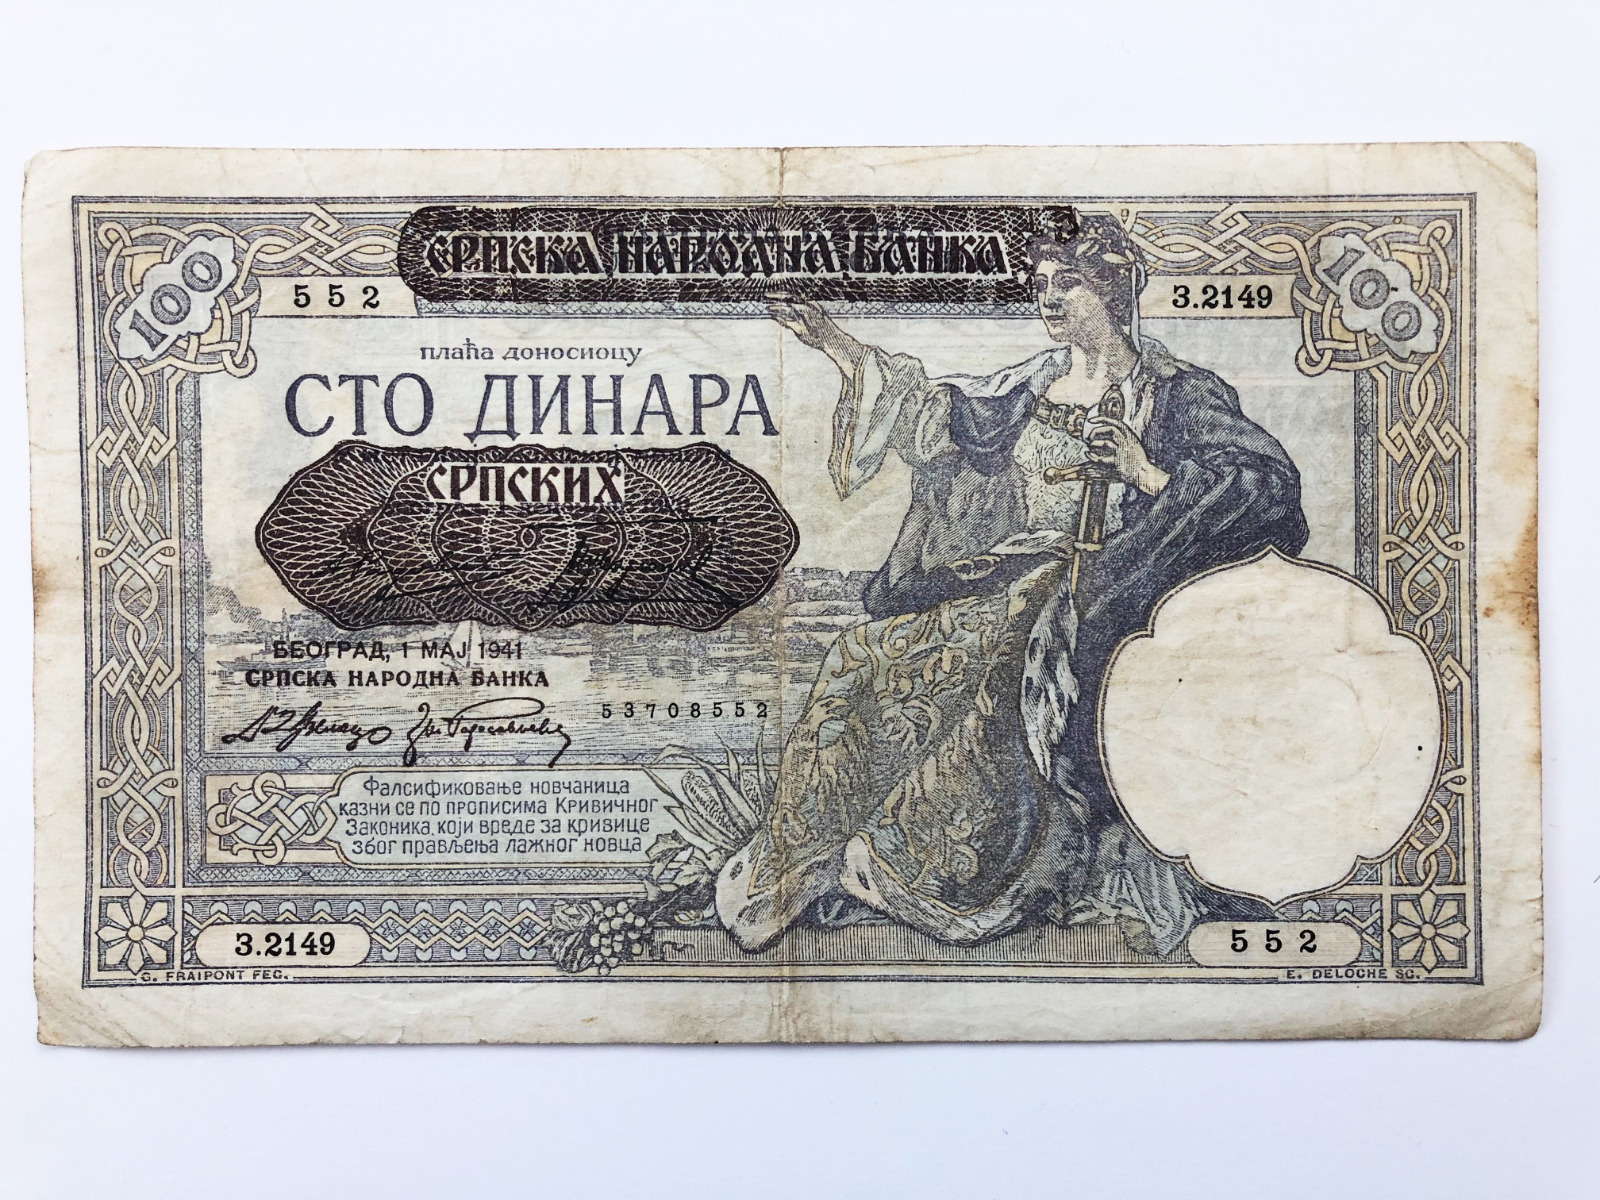 Serbia WWII 100 Dinara 1941 Circulated Money Nazi Occupation Cash Banknote